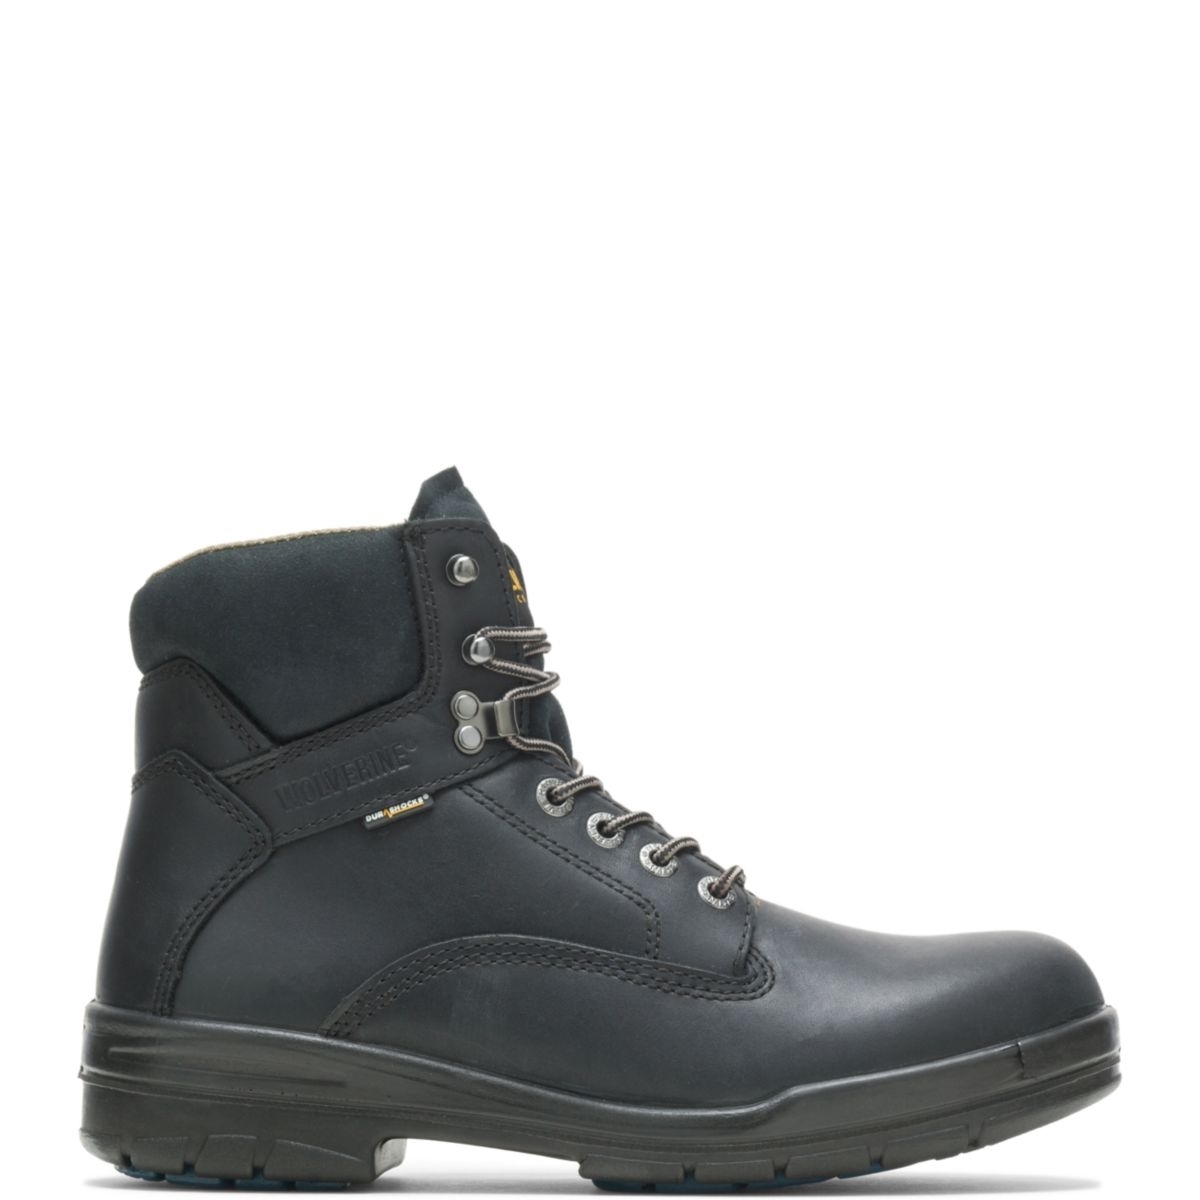 WOLVERINE Men's 6 DuraShocksÂ® Slip Resistant Direct-Attached Lined Soft Toe Work Boot Black - W03123 14 WIDE BLACK - BLACK, 11.5 Wide